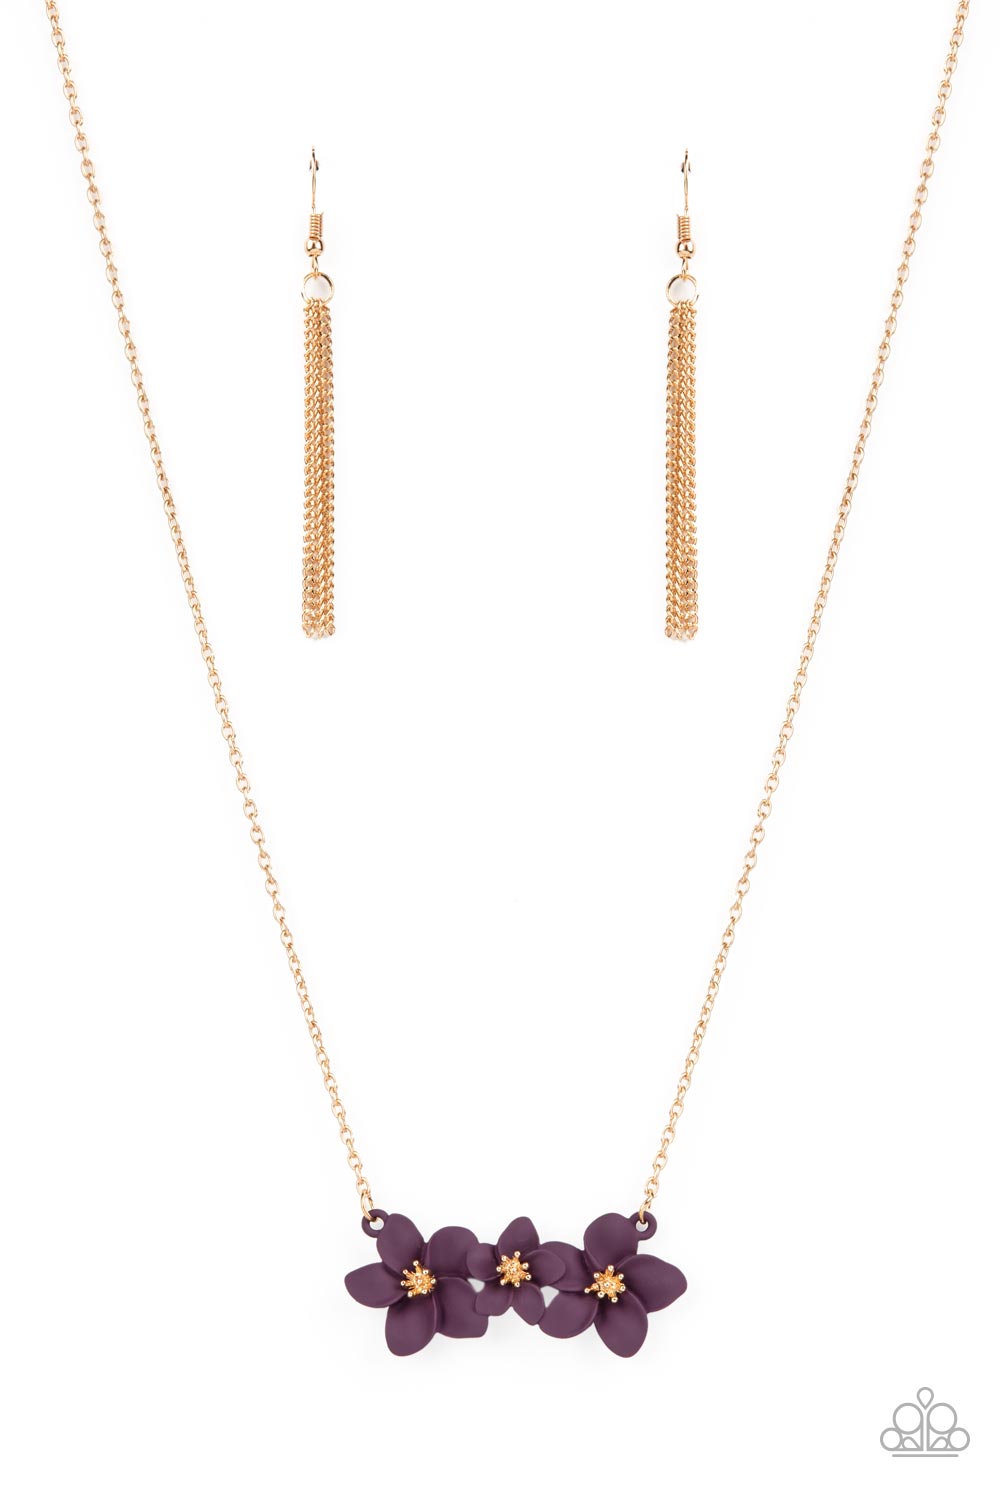 Paparazzi Petunia Picnic Purple Necklace $5 Jewelry. Get Free Shipping! #P2WH-PRXX-417XX